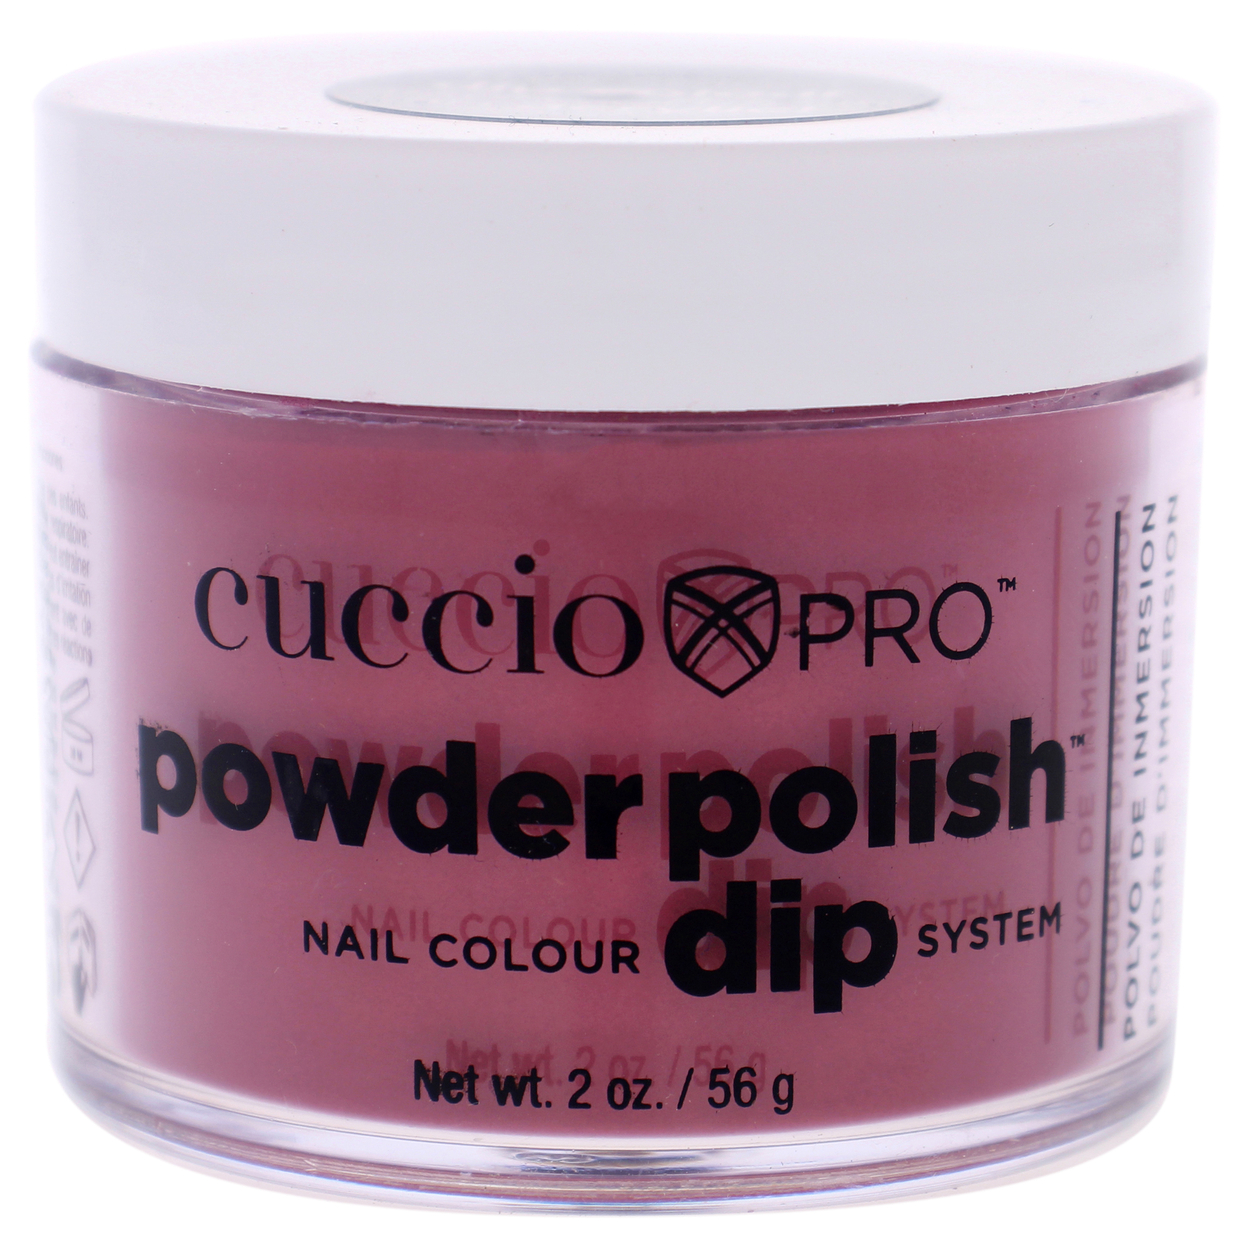 Cuccio Colour Pro Powder Polish Nail Colour Dip System - Deep Rose Nail Powder 1.6 Oz